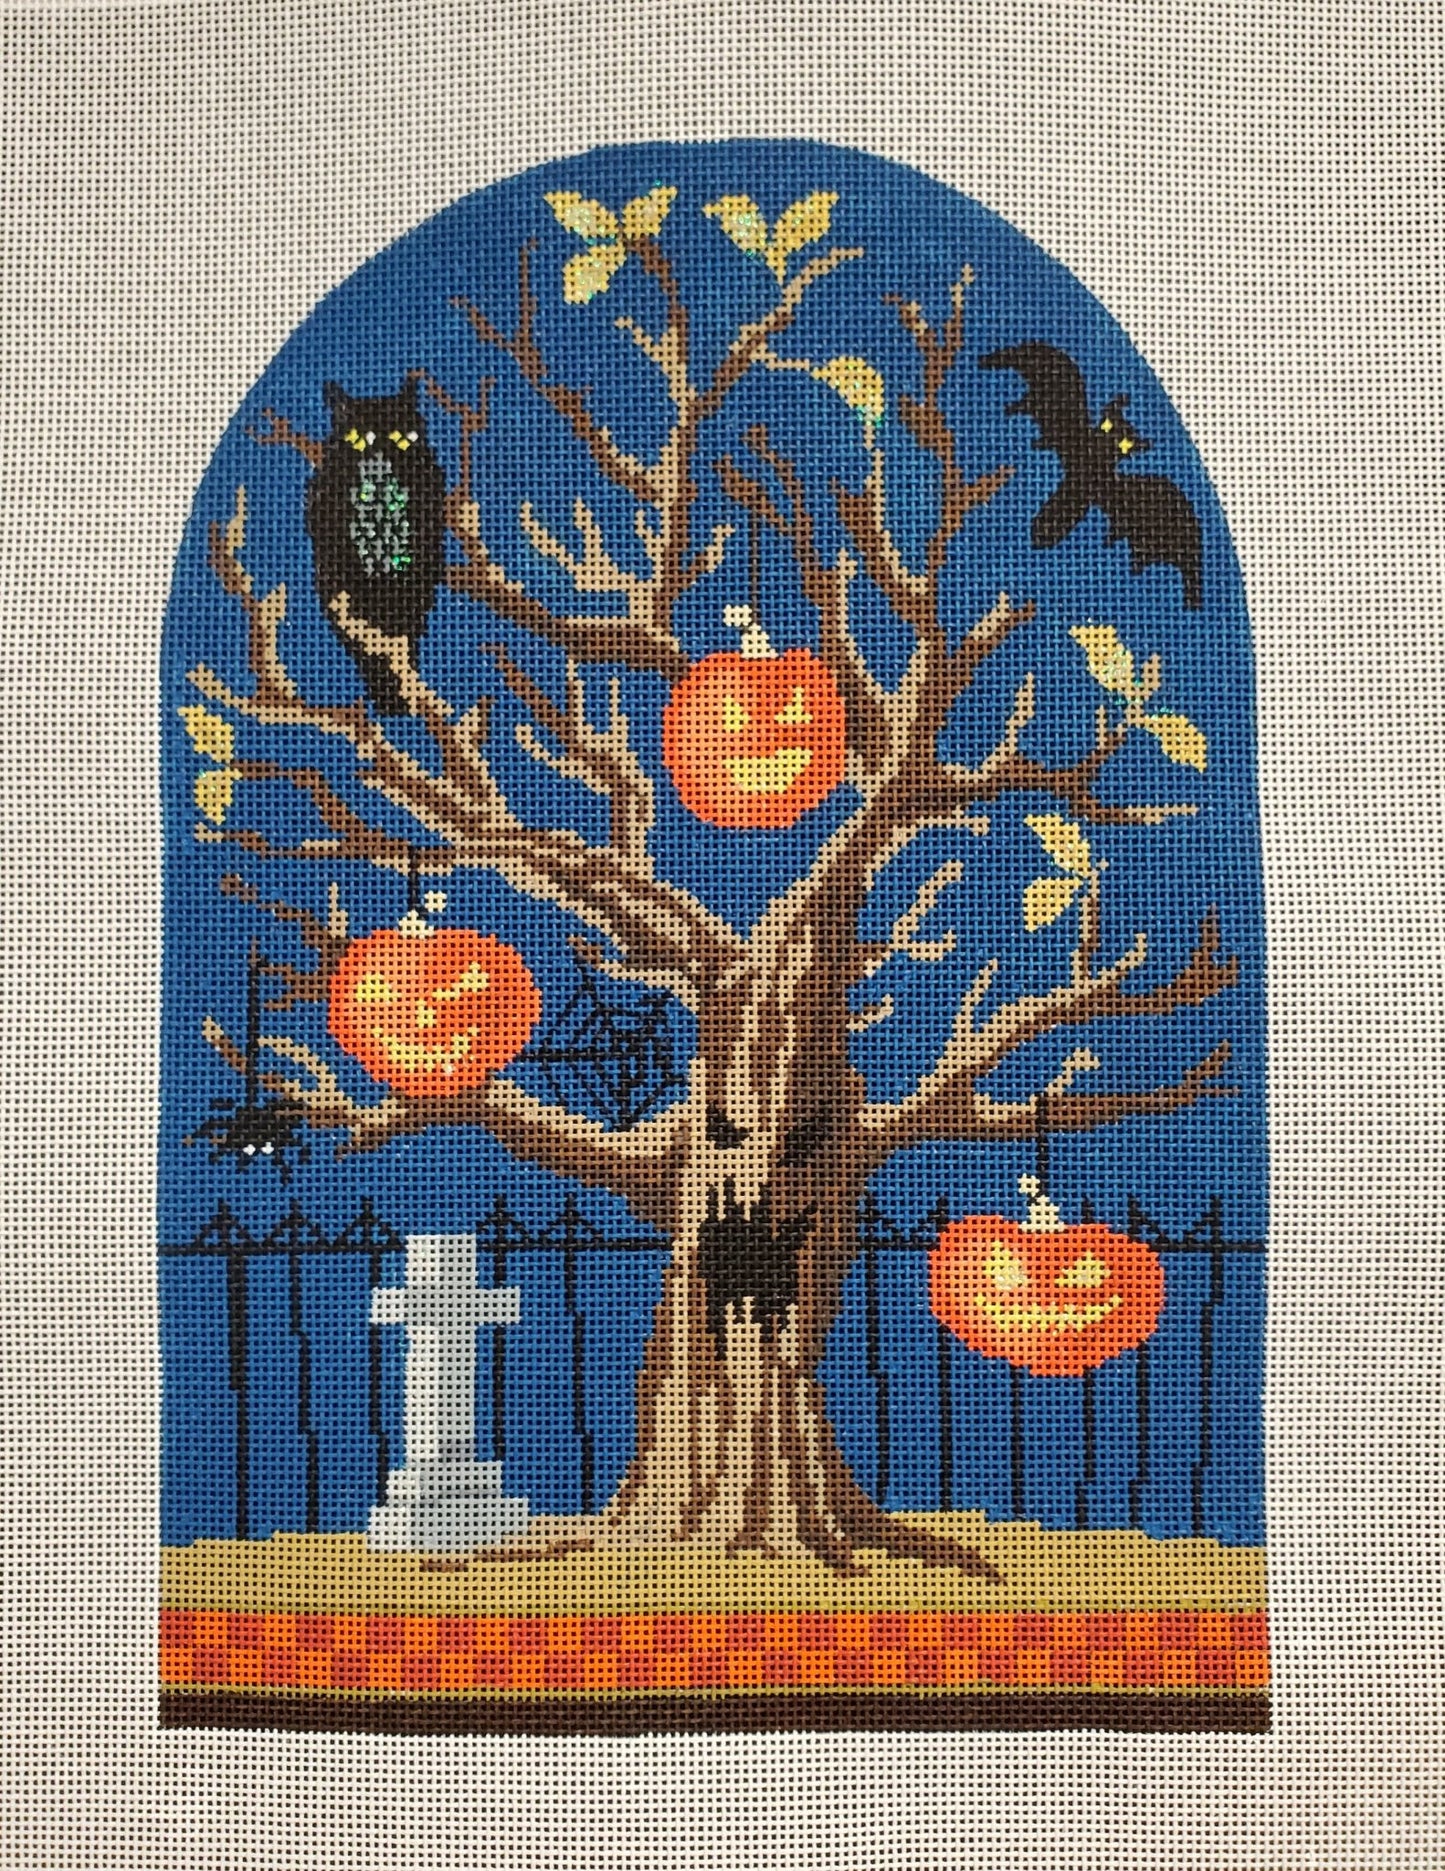 Spooky Tree Pumpkins - The Flying Needles